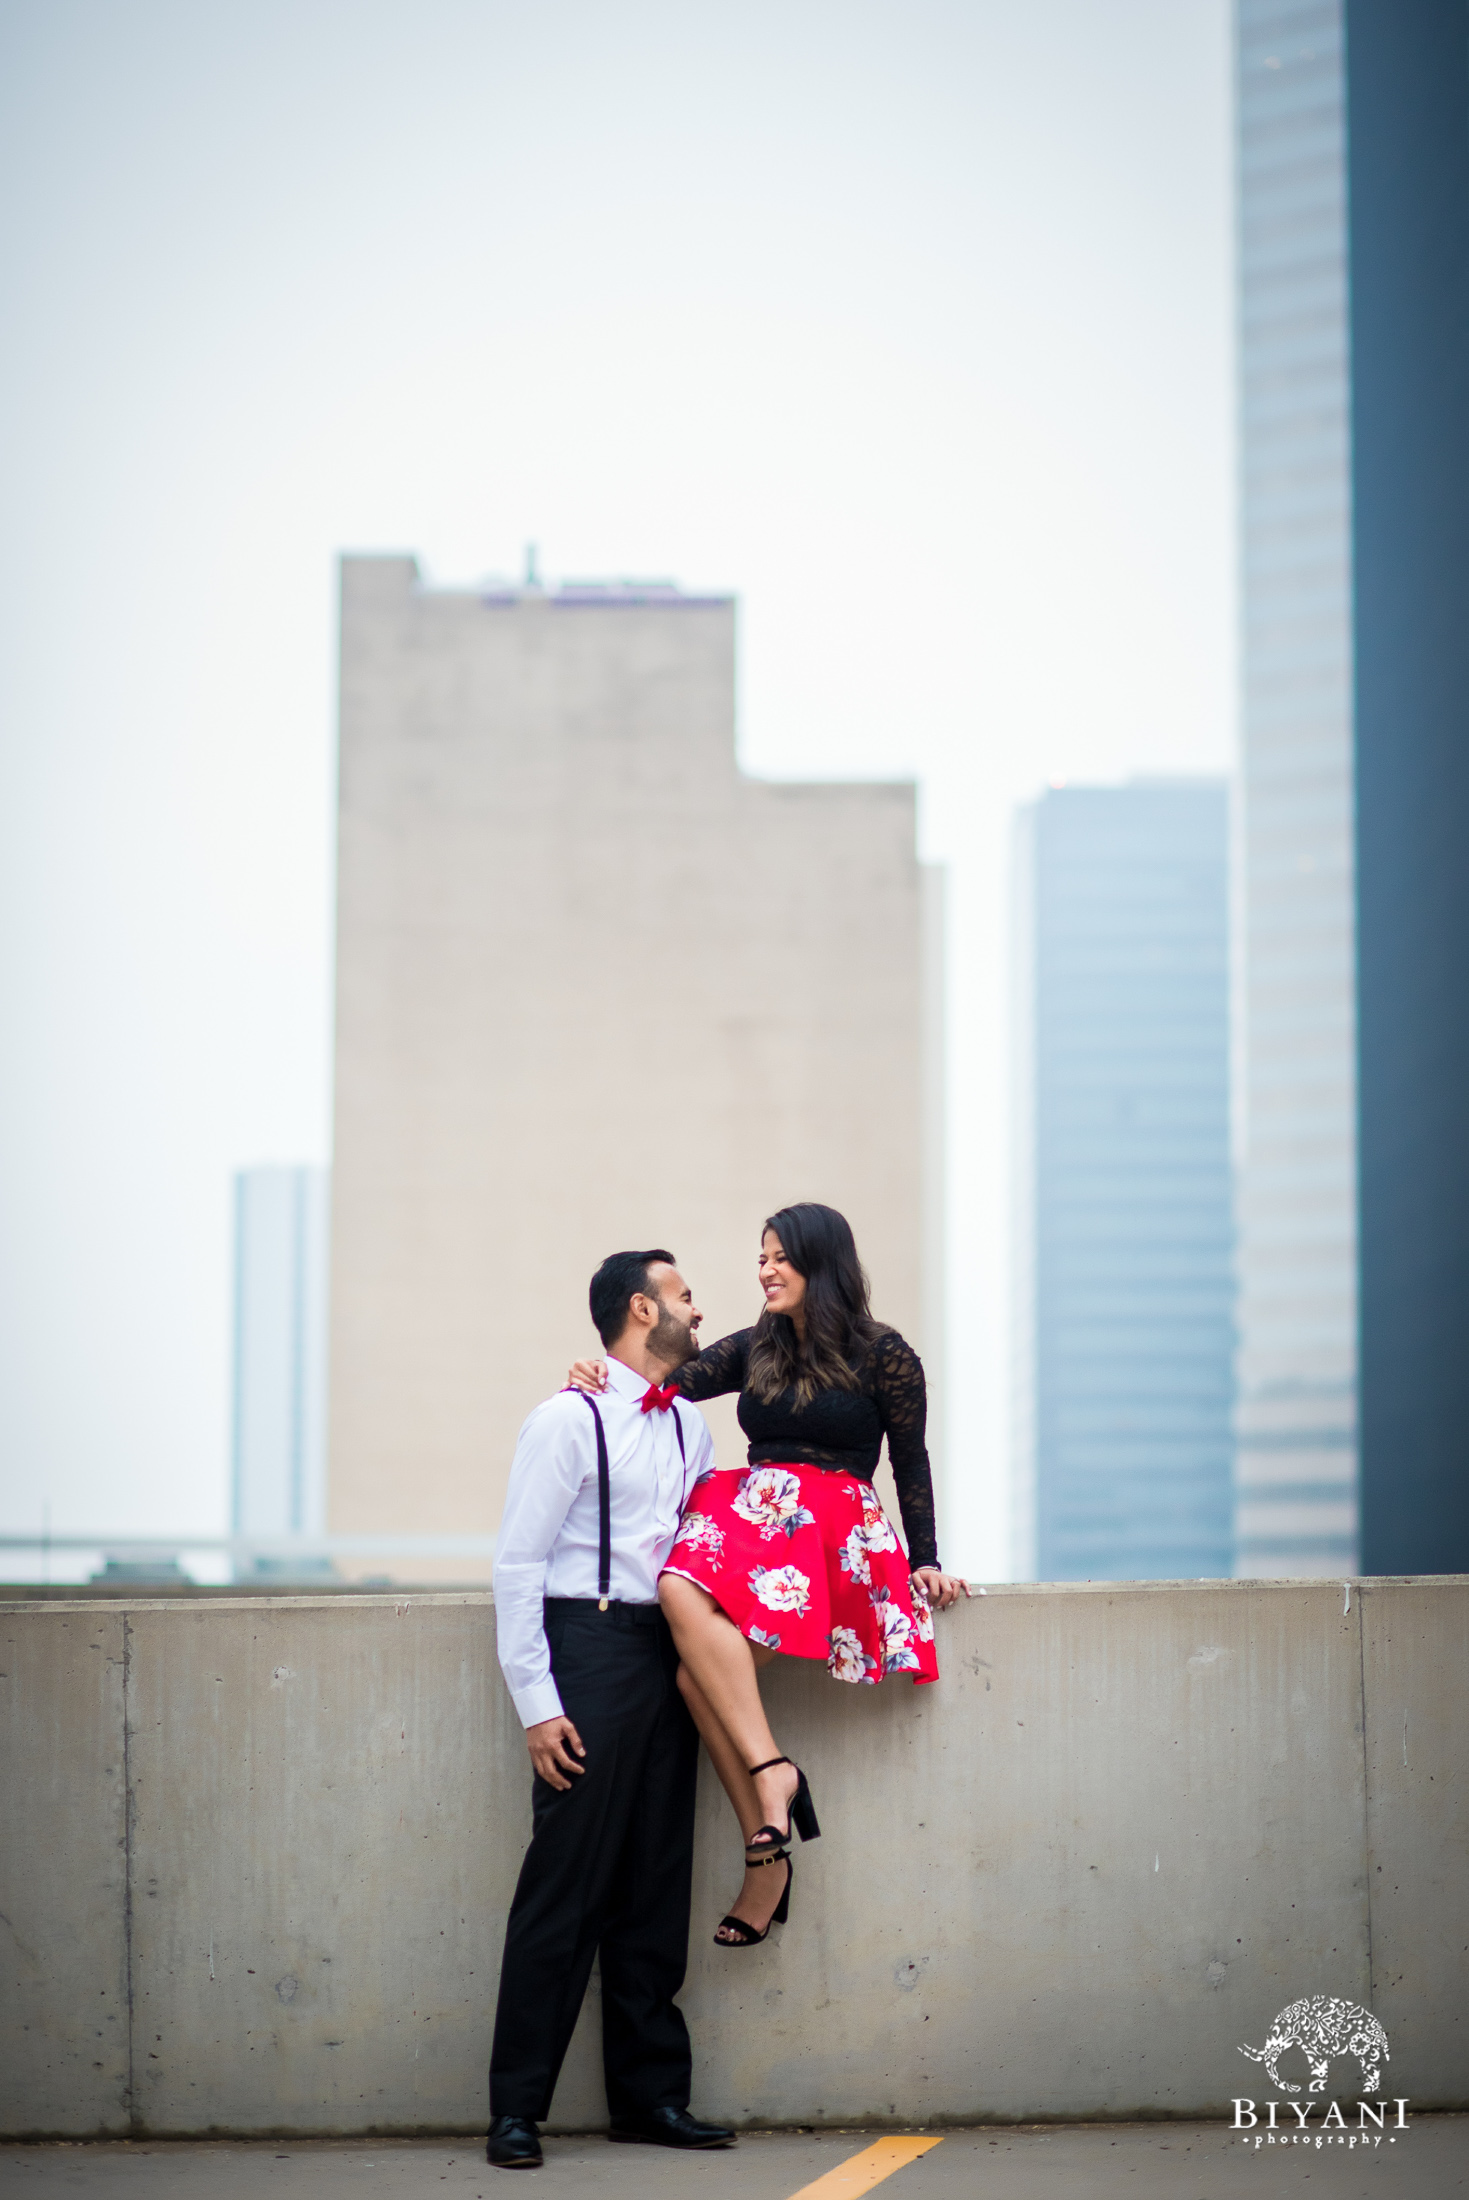 Sri Lankan couple during an engagement photo shoot sitting on the ledge overlooking Houston city skyline